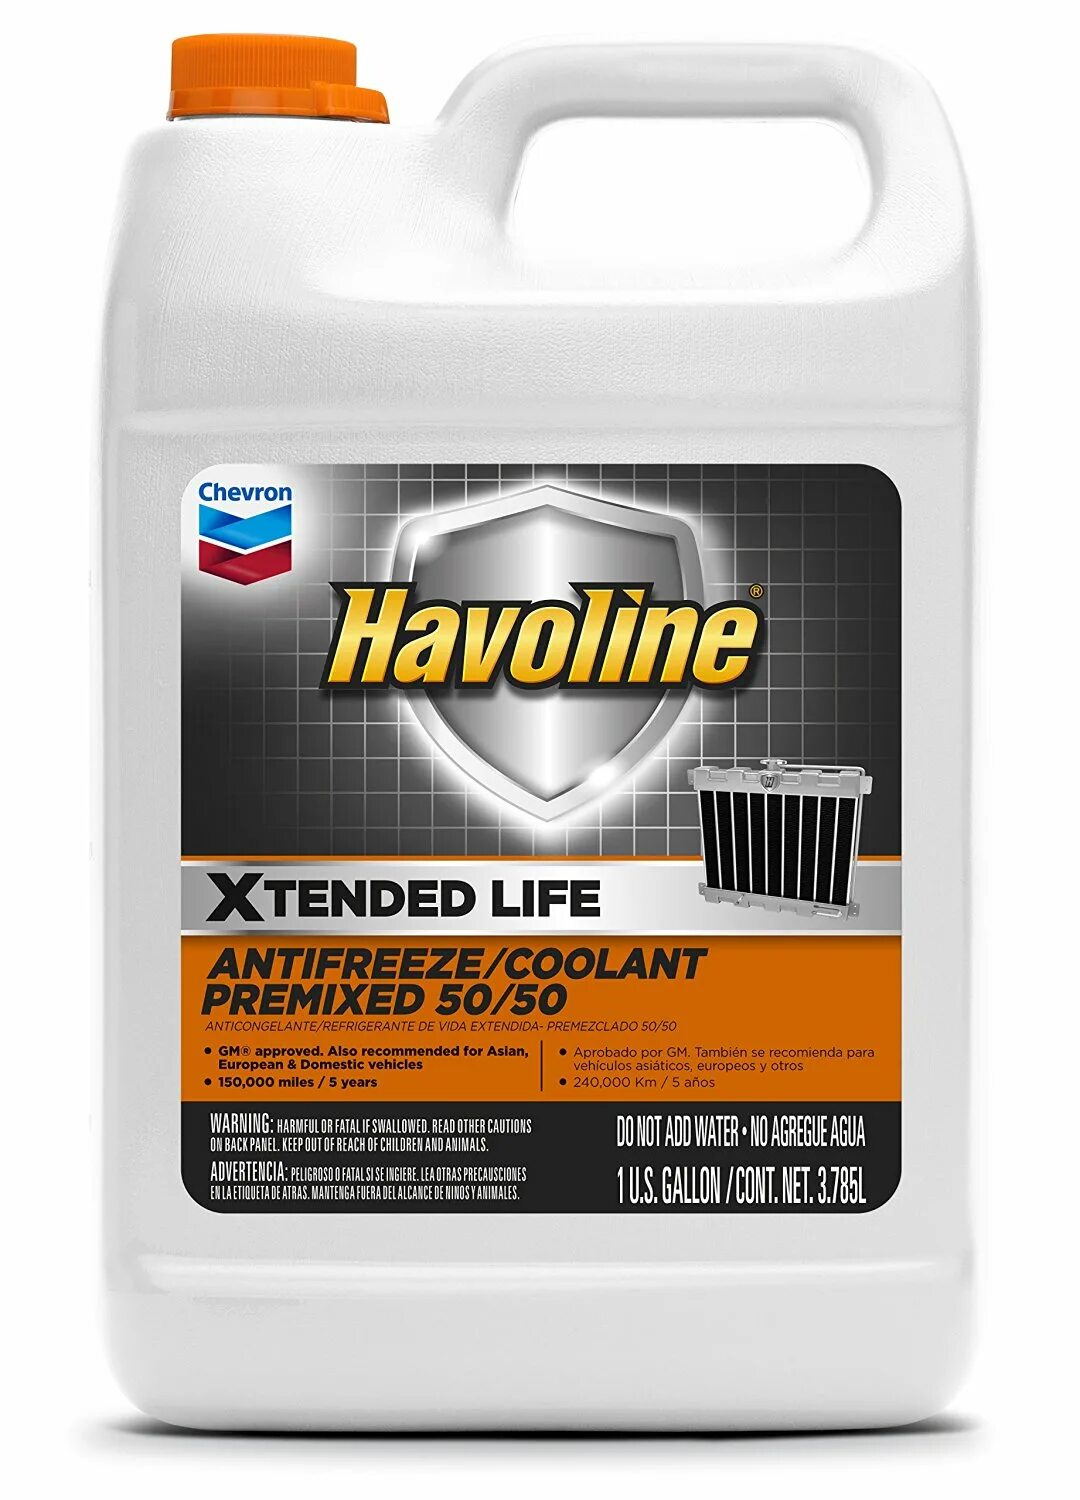 Extended life coolant. Антифриз Chevron Havoline Universal Antifreeze/Coolants Prediluted 50/50. Антифриз Chevron Havoline Xtended Life 50/50. Havoline XLC антифриз.